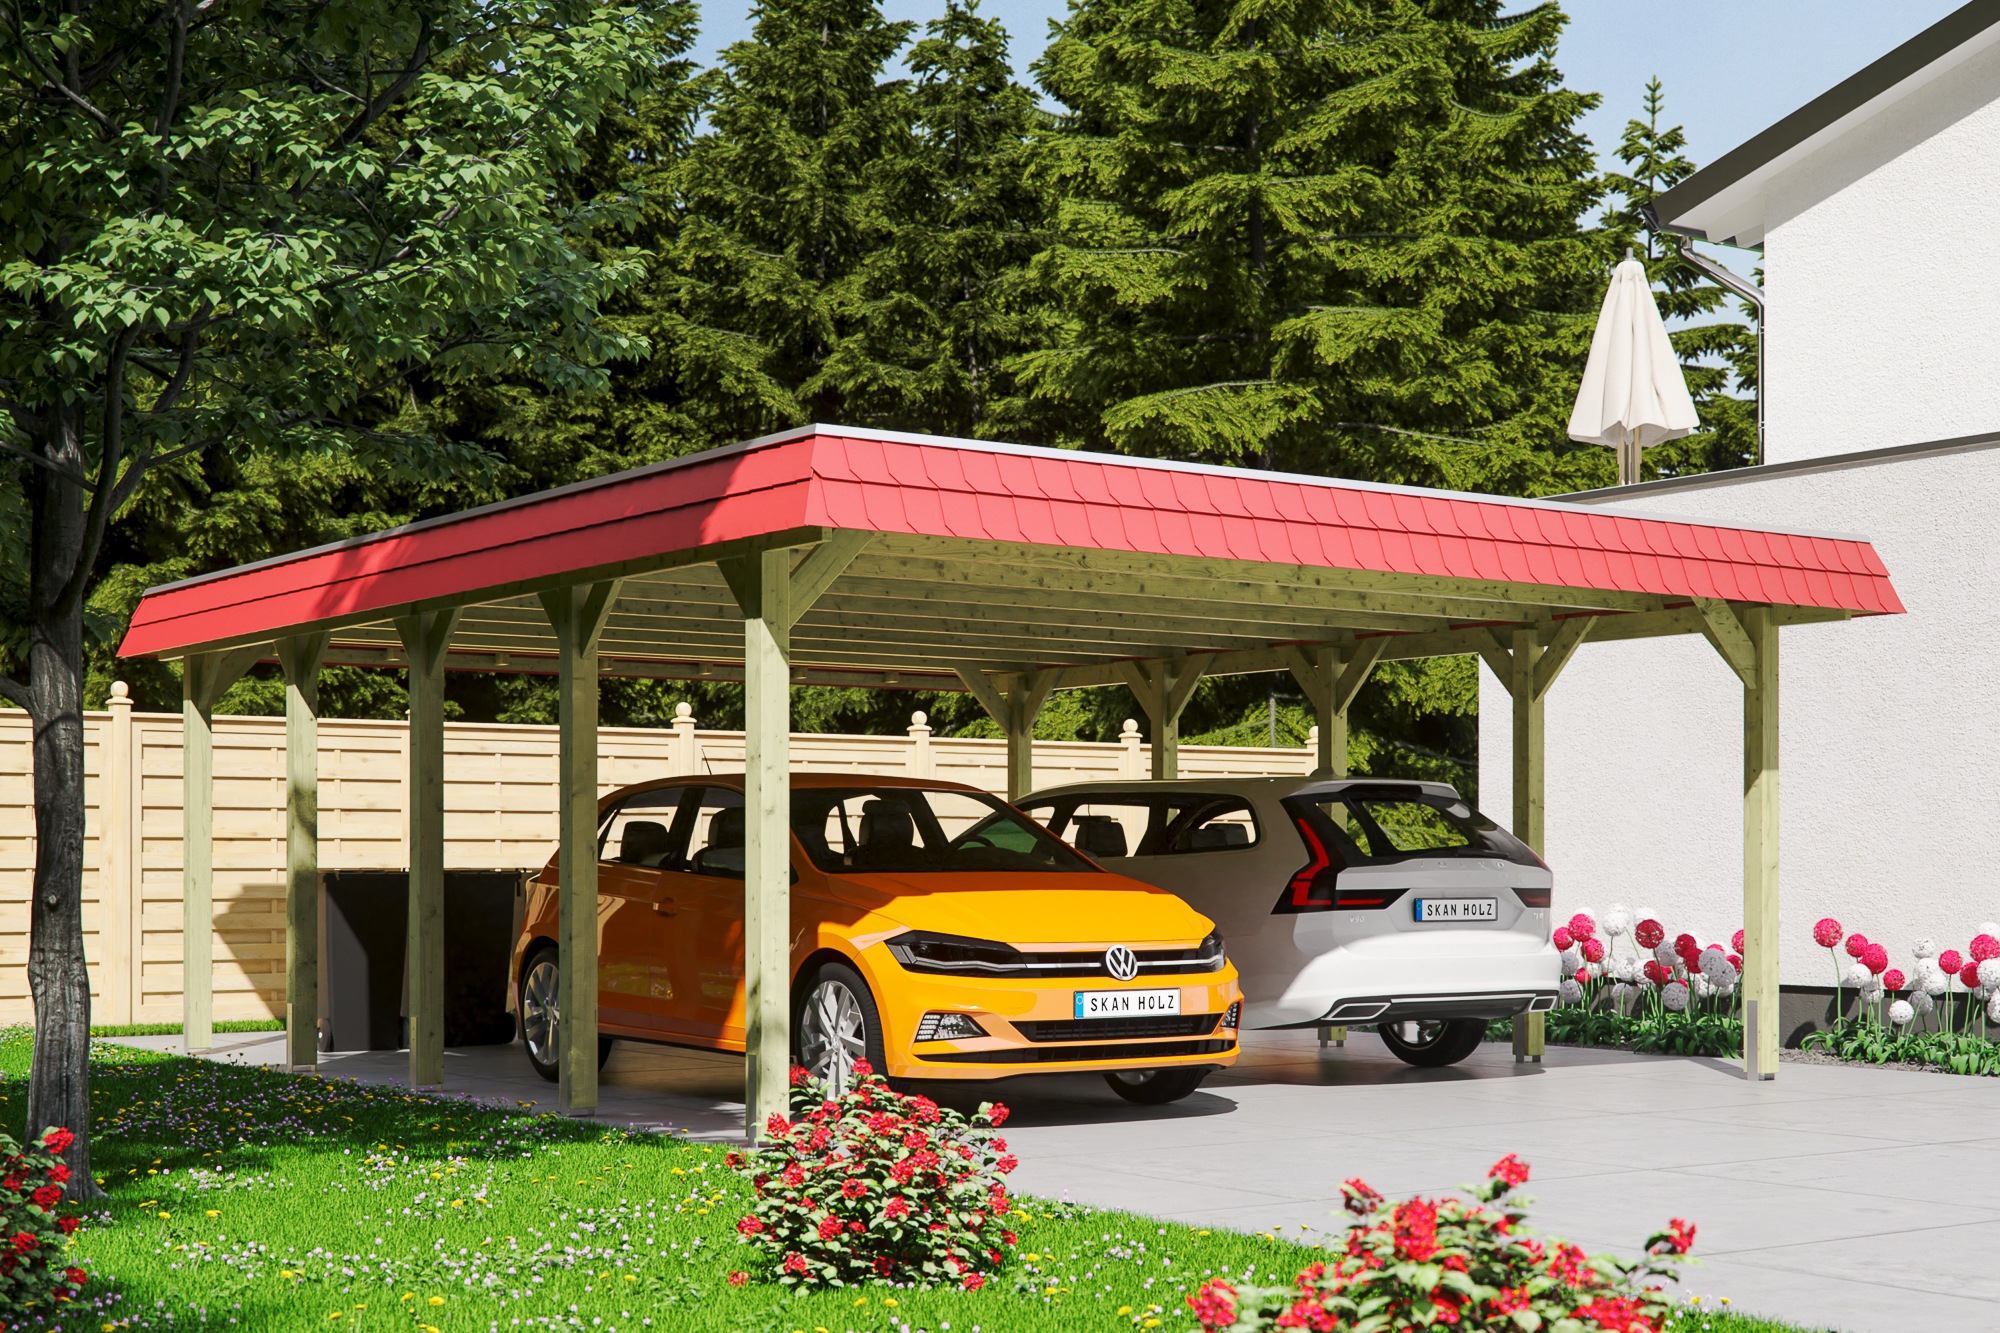 Skanholz Doppelcarport »Spreewald«, Nadelholz, 530 cm, Grün, 585x741cm mit EPDM-Dach, rote Blende